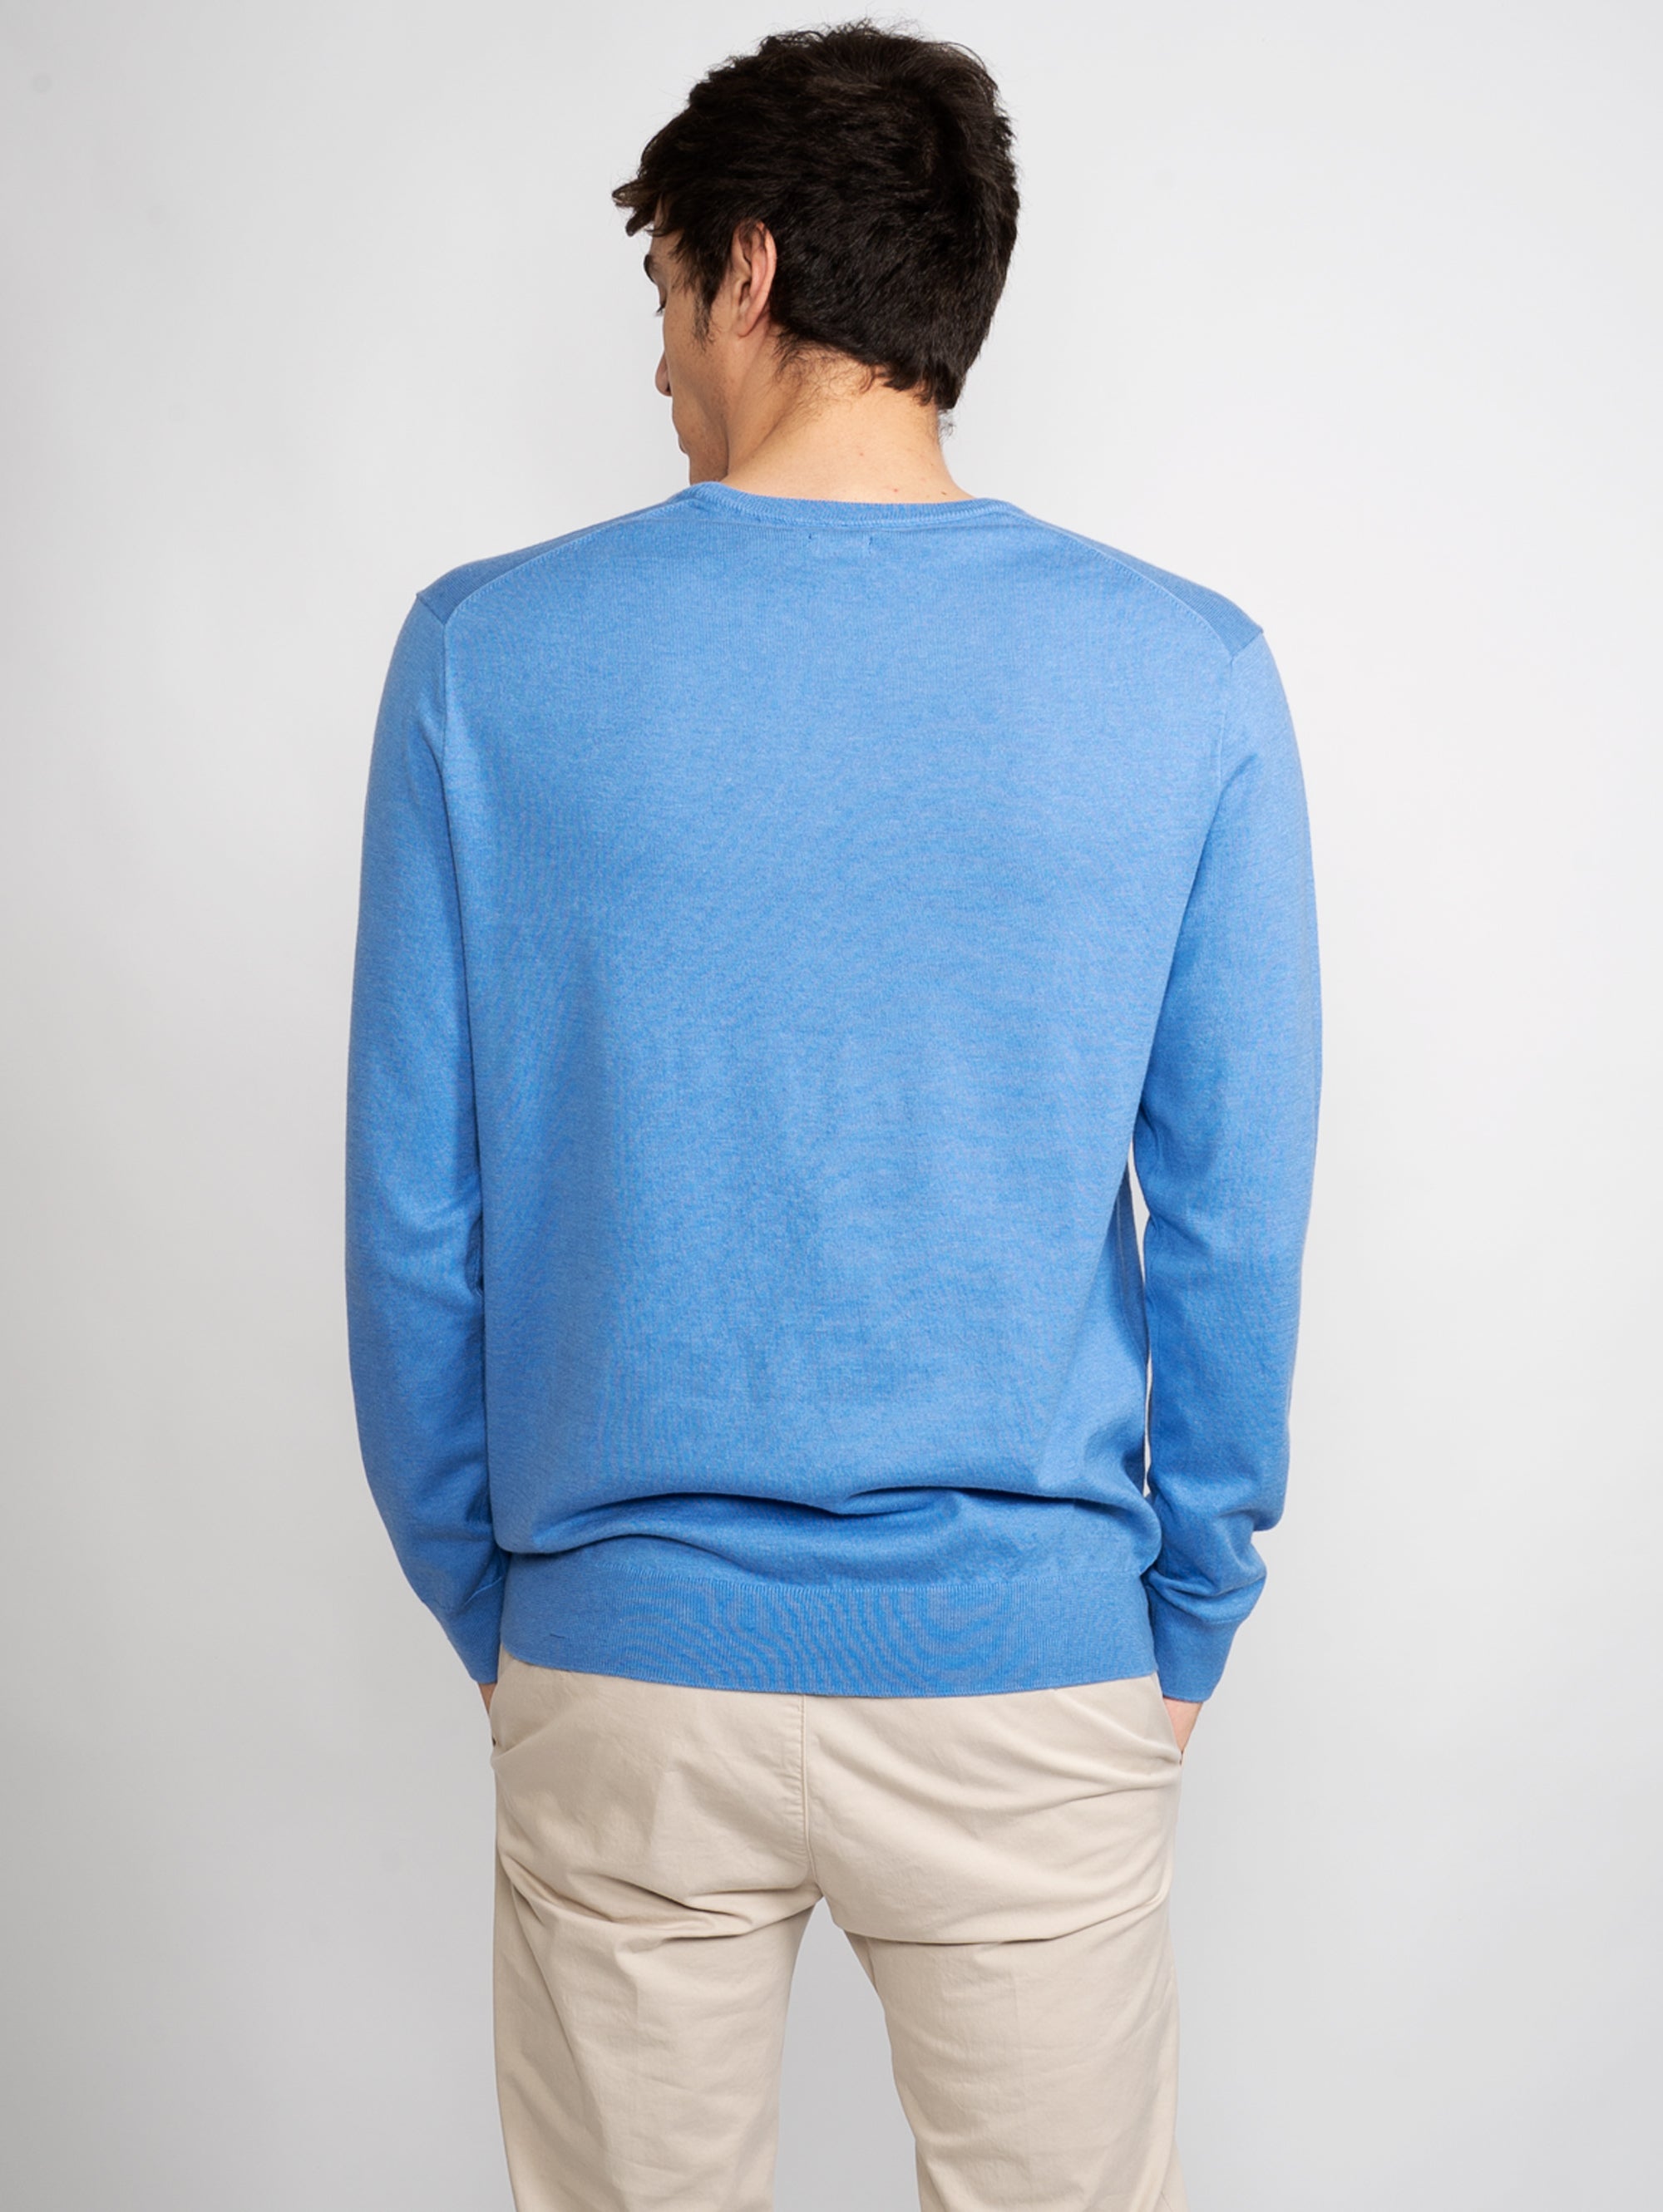 Blue Slim Fit Cotton Sweater